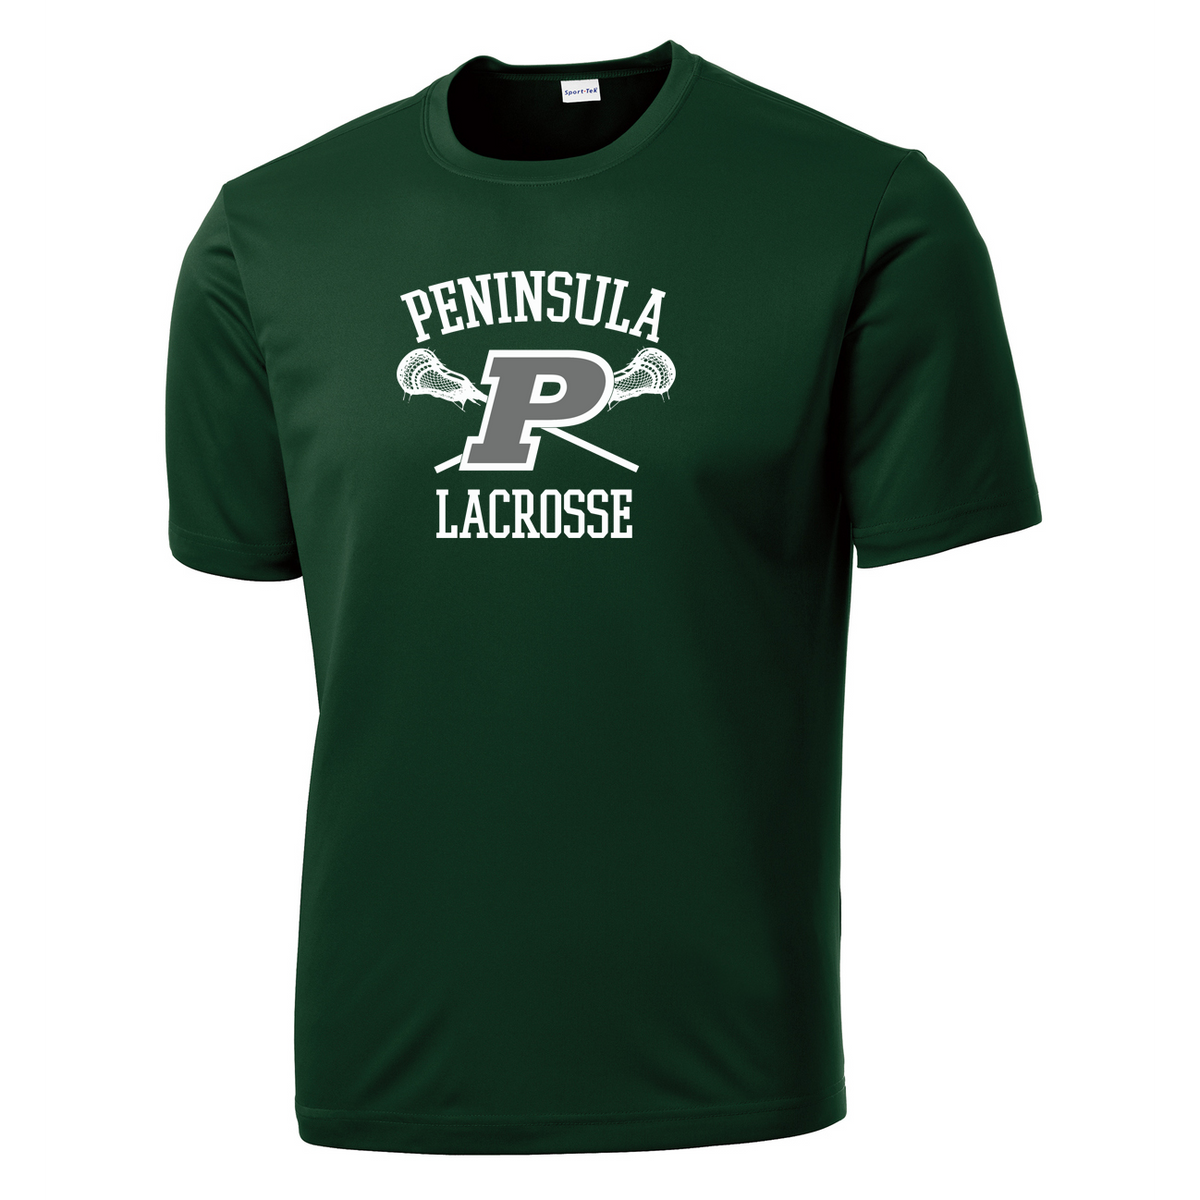 Peninsula Lacrosse Performance T-Shirt